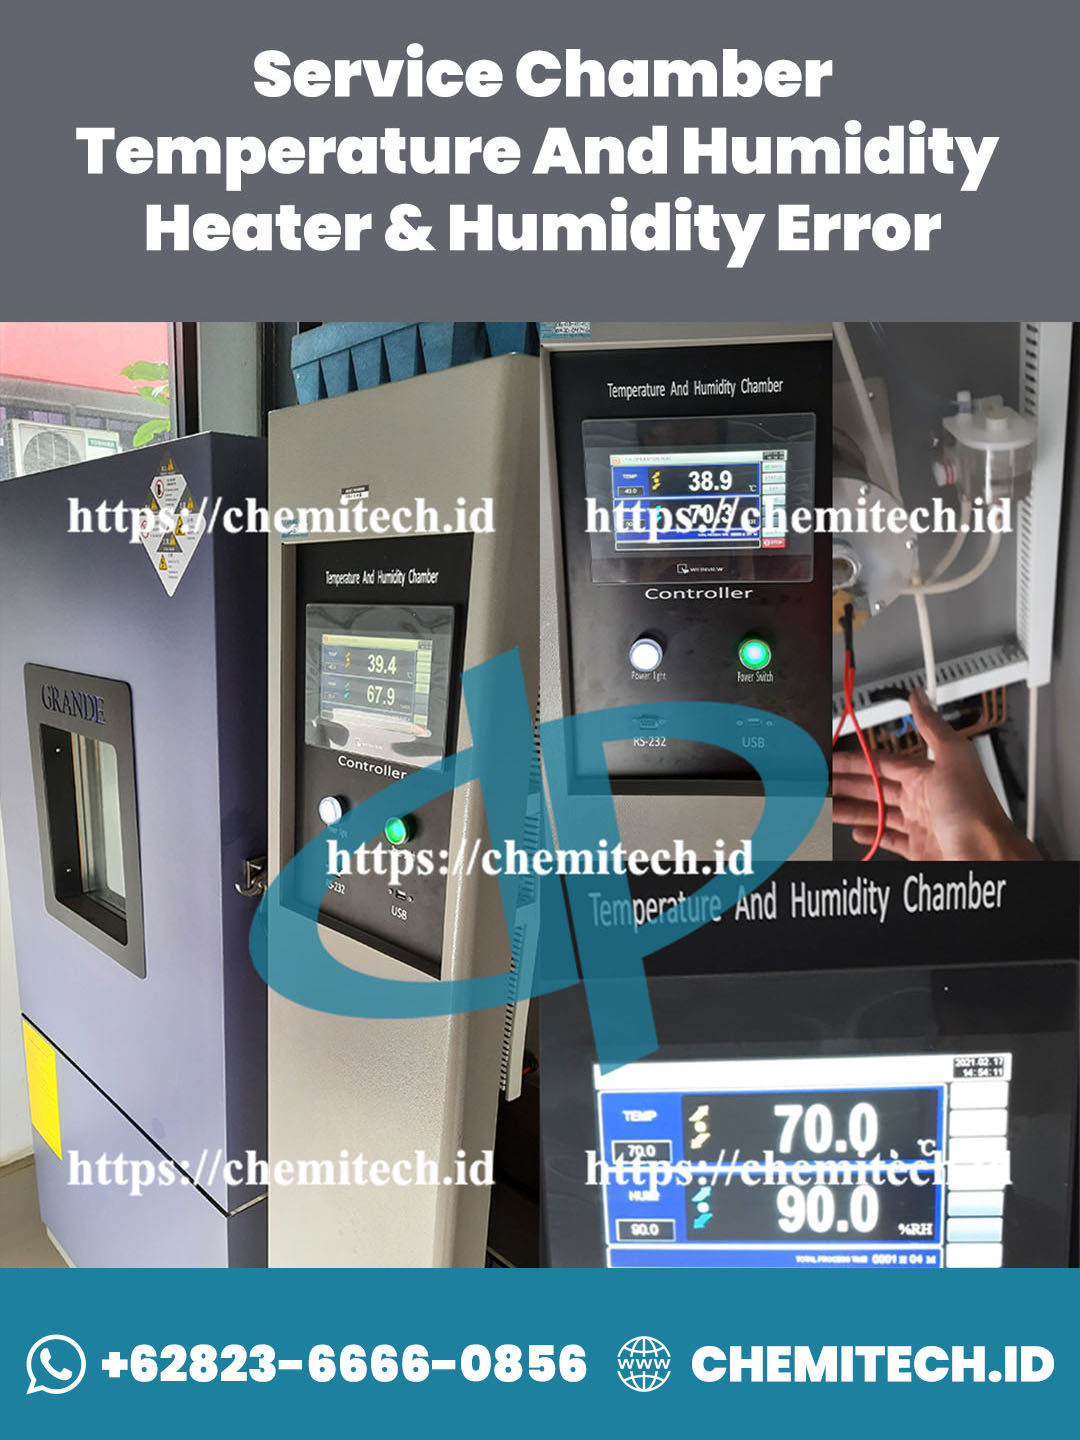 Web Stories - Service Temperature And Humidity Chamber Grande Error Temperature & Humidity